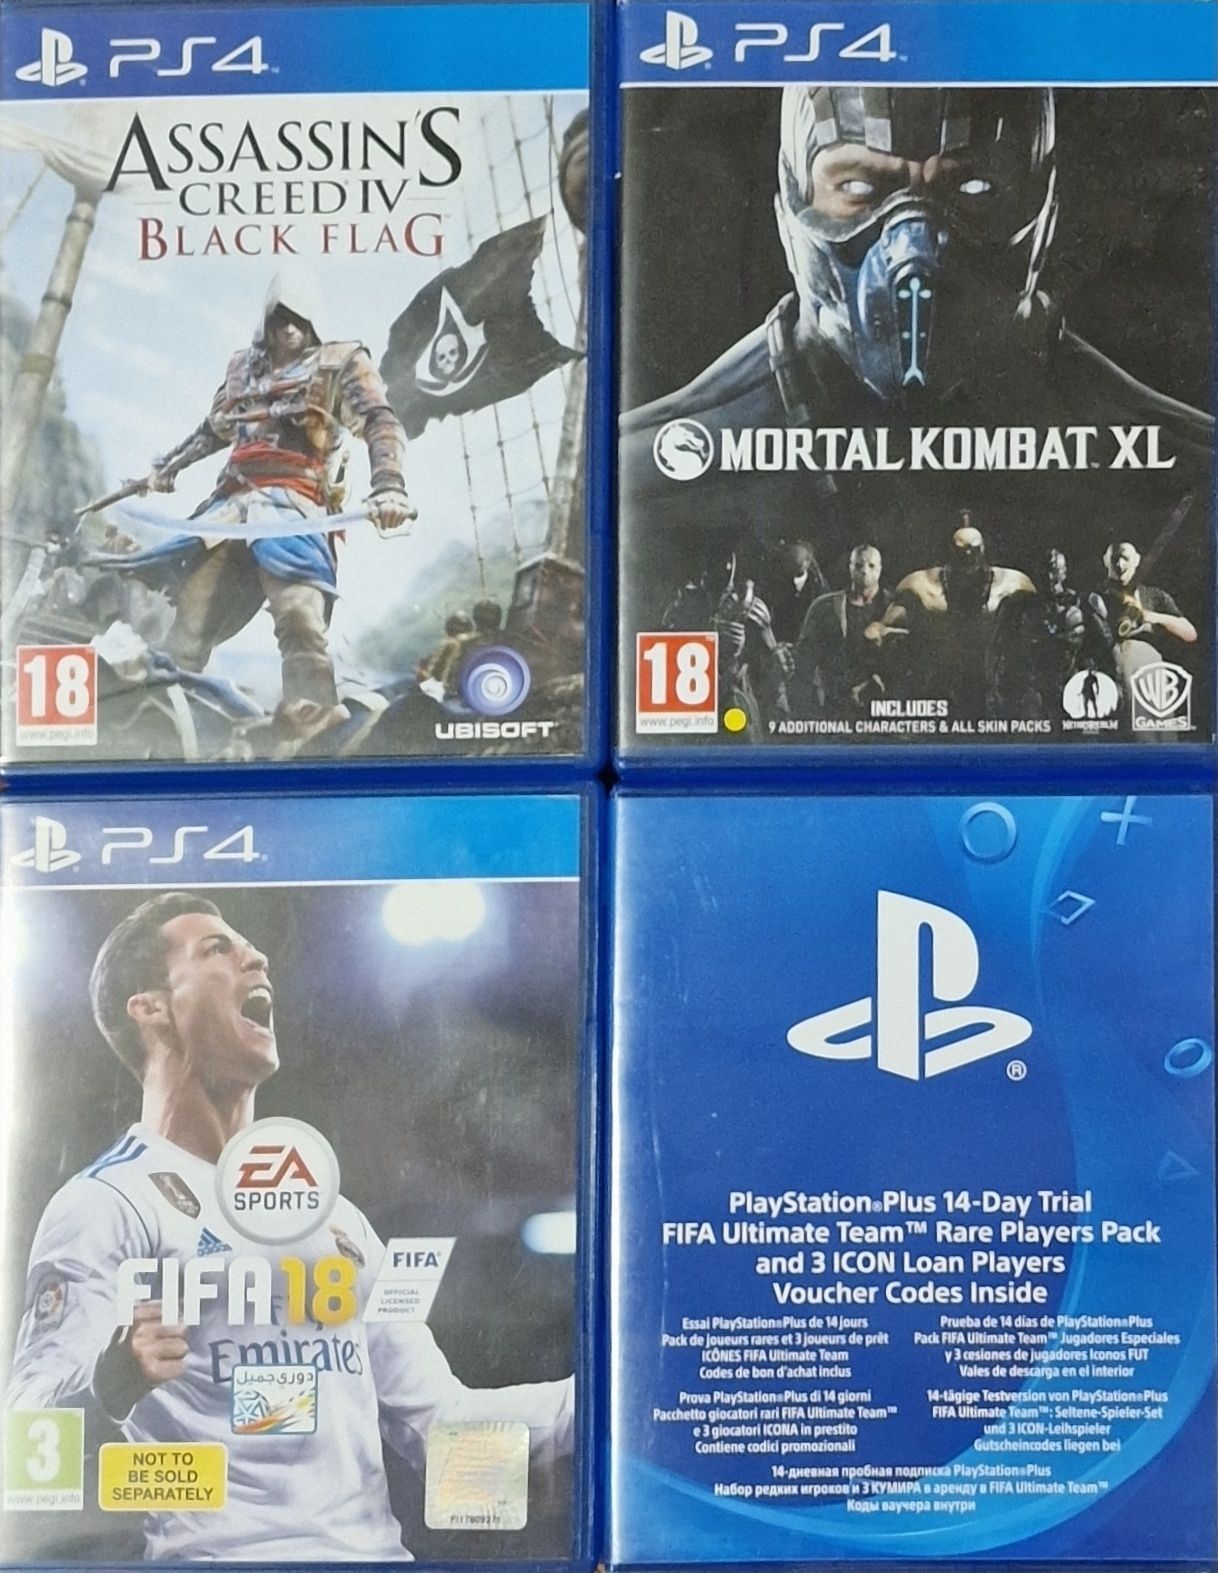 PS4 jocuri MK,Fifa19, Assassin's Creed +14 zile PS Plus